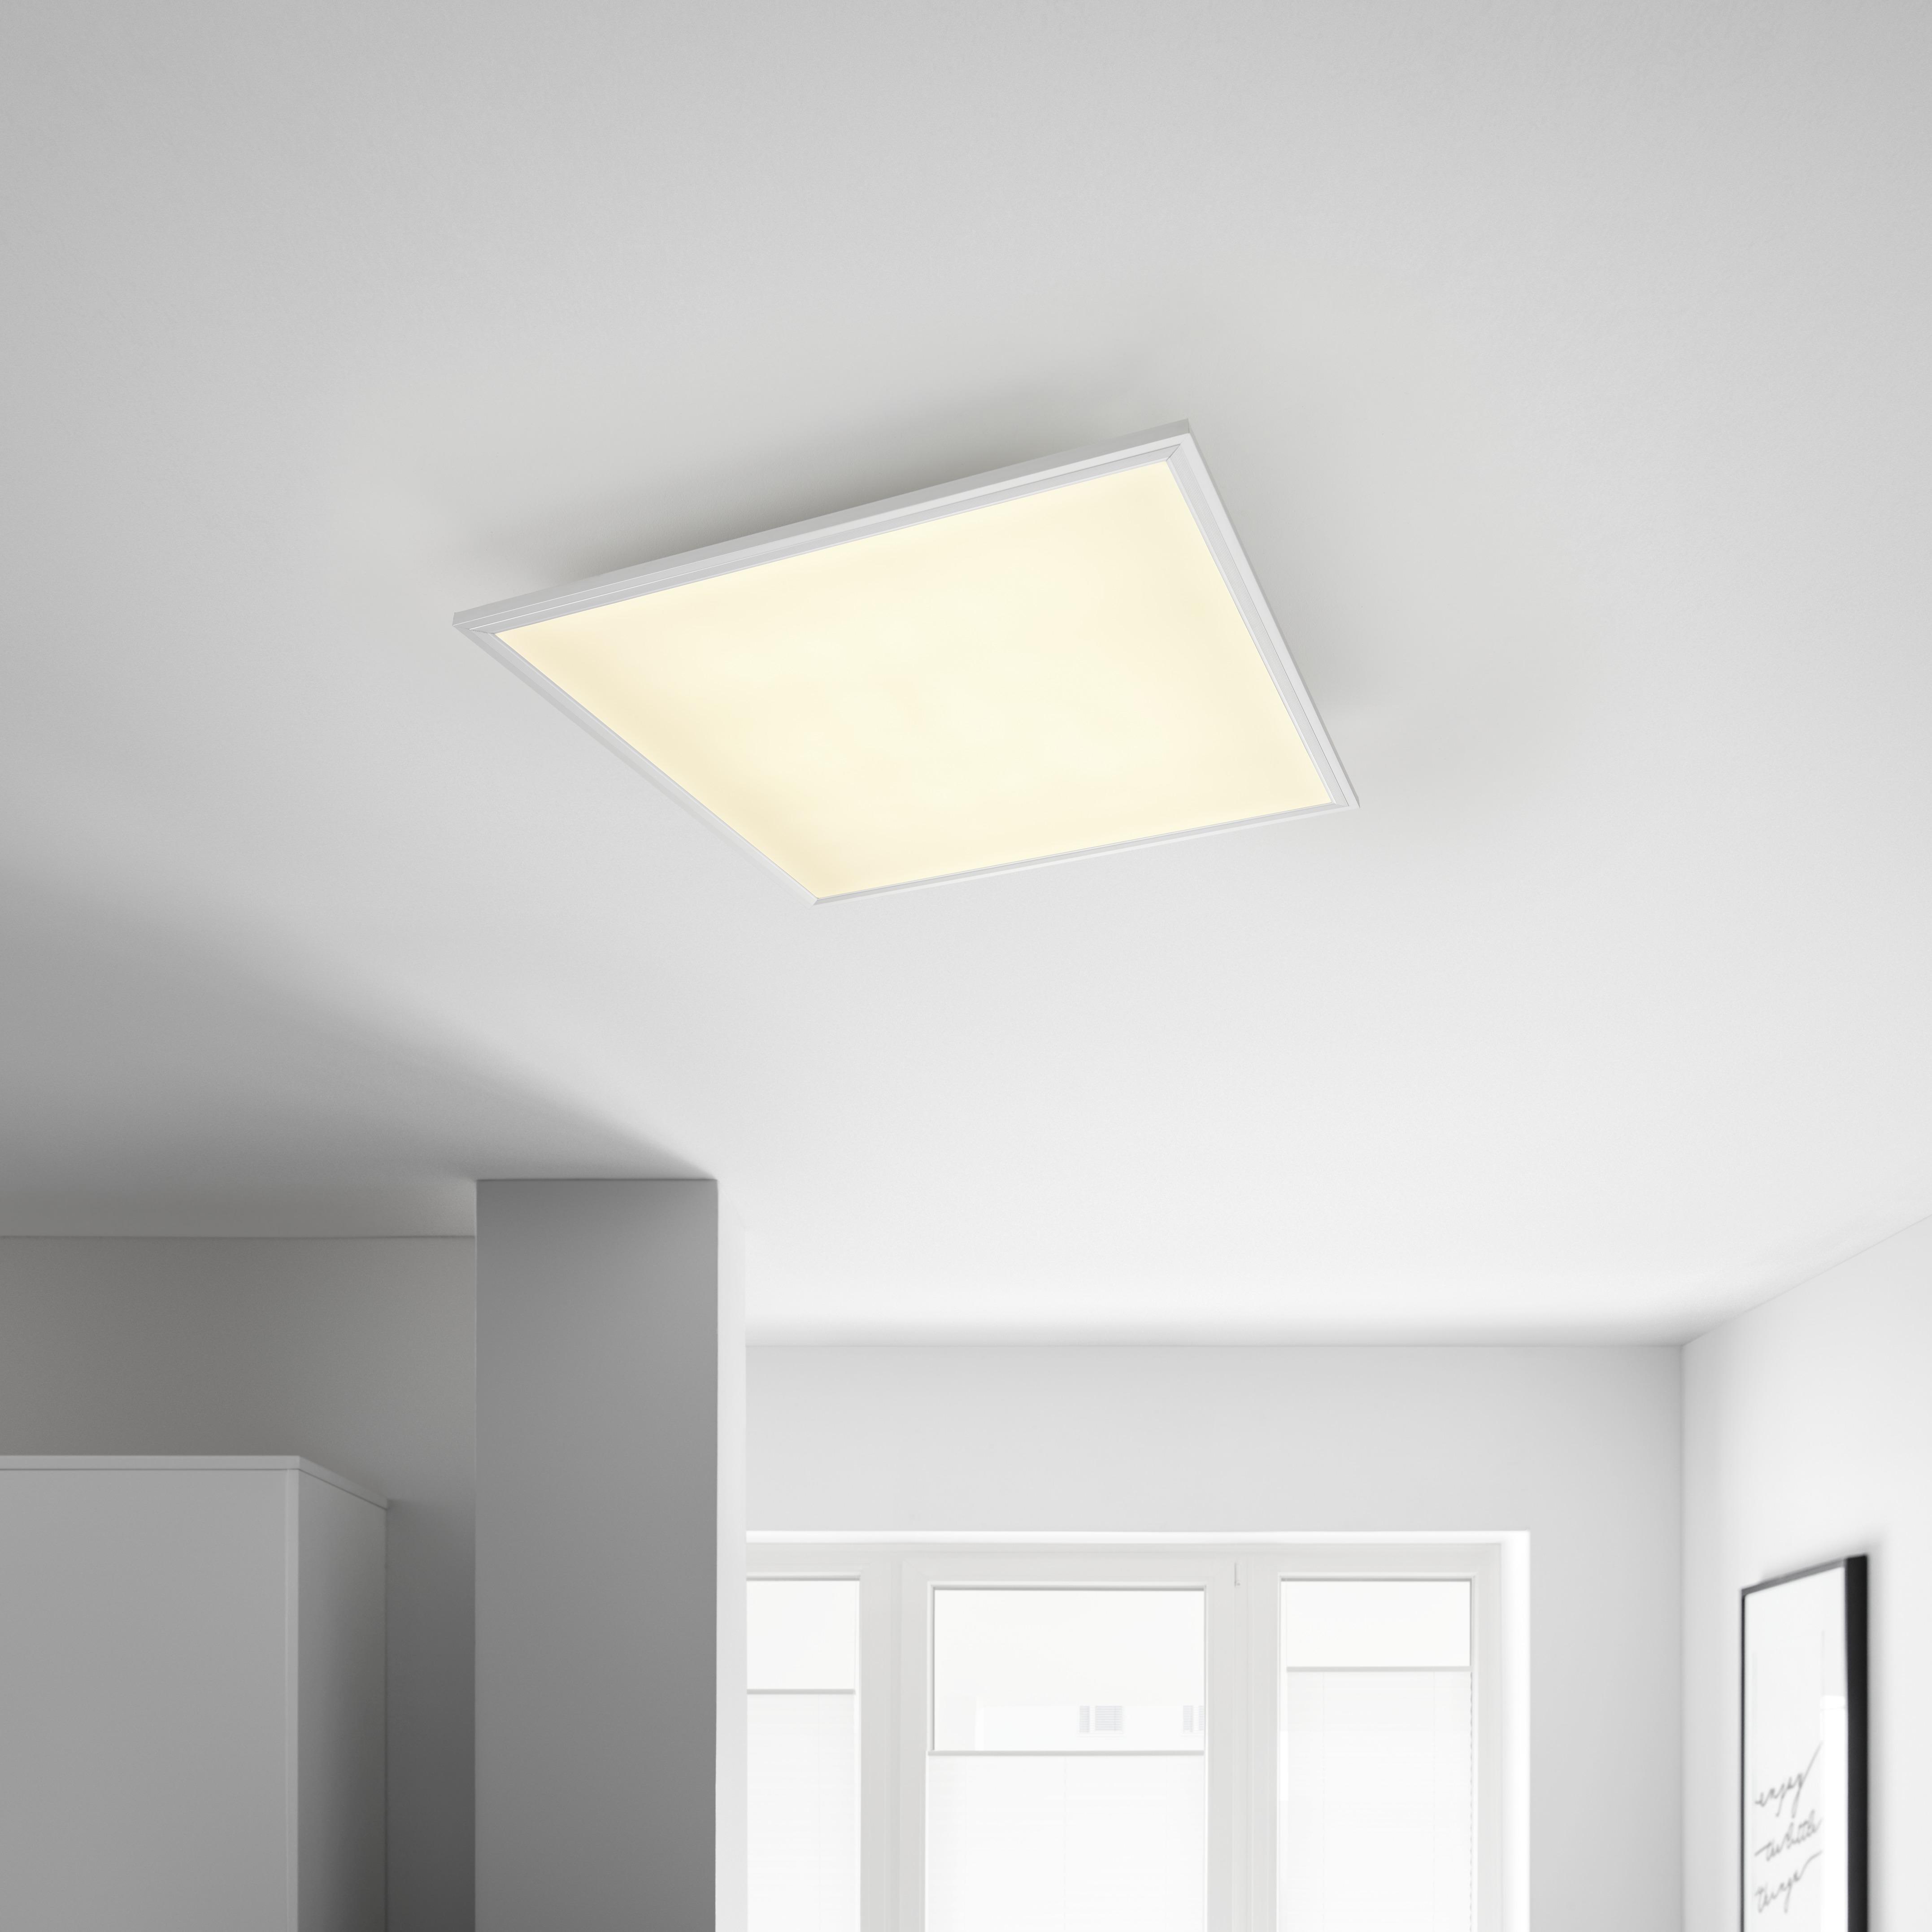 LED Mennyezeti Lámpa Cornelius - Fehér, modern, Műanyag/Fém (59,5/59,5/8cm) - Premium Living